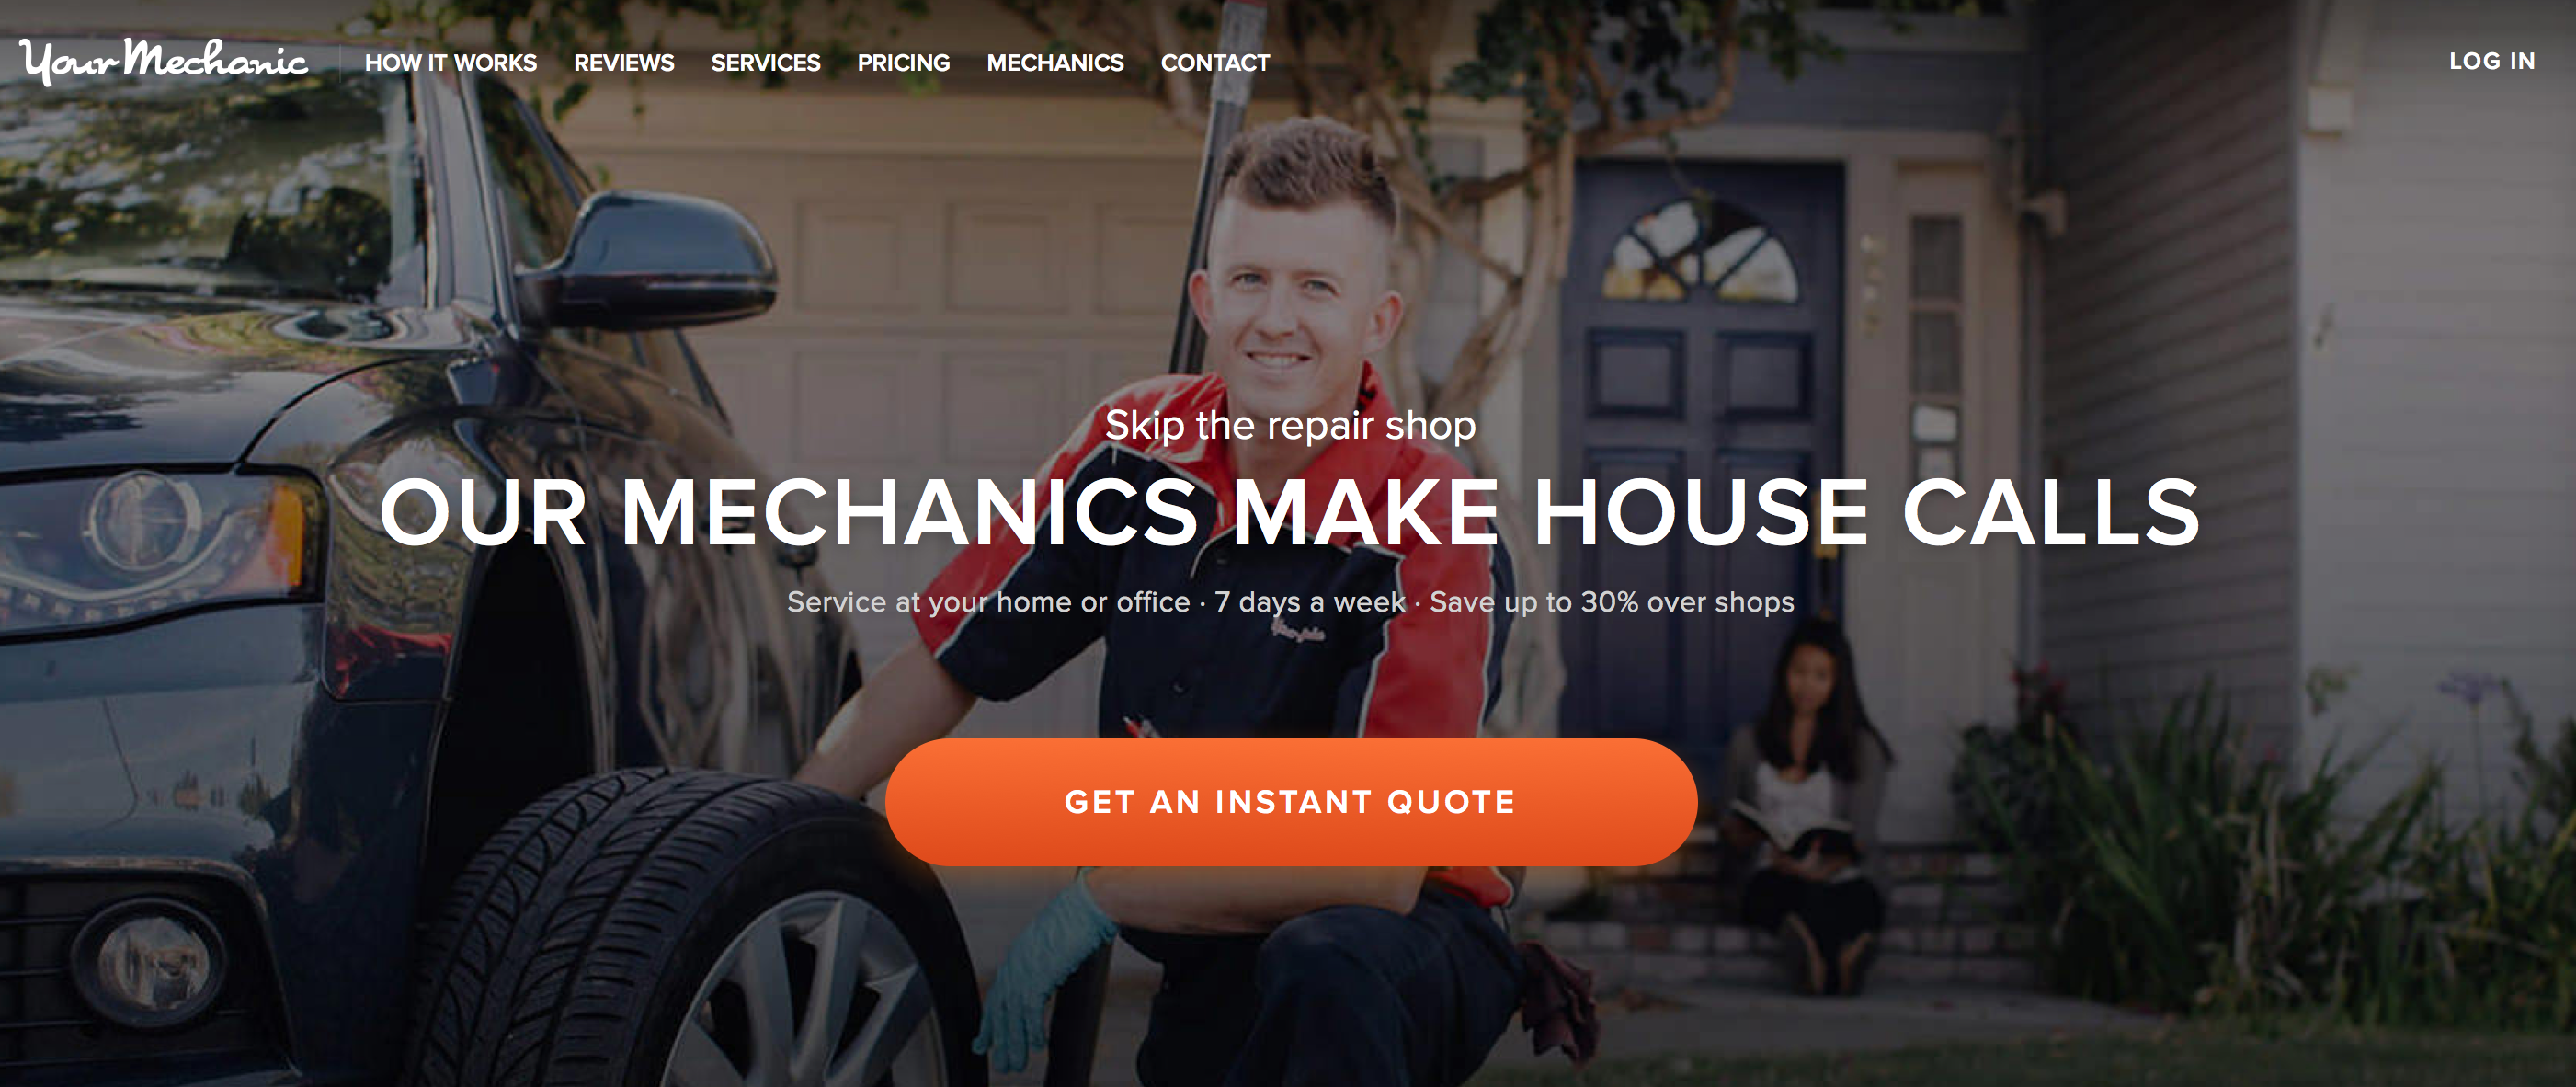 YourMechanic Home Page